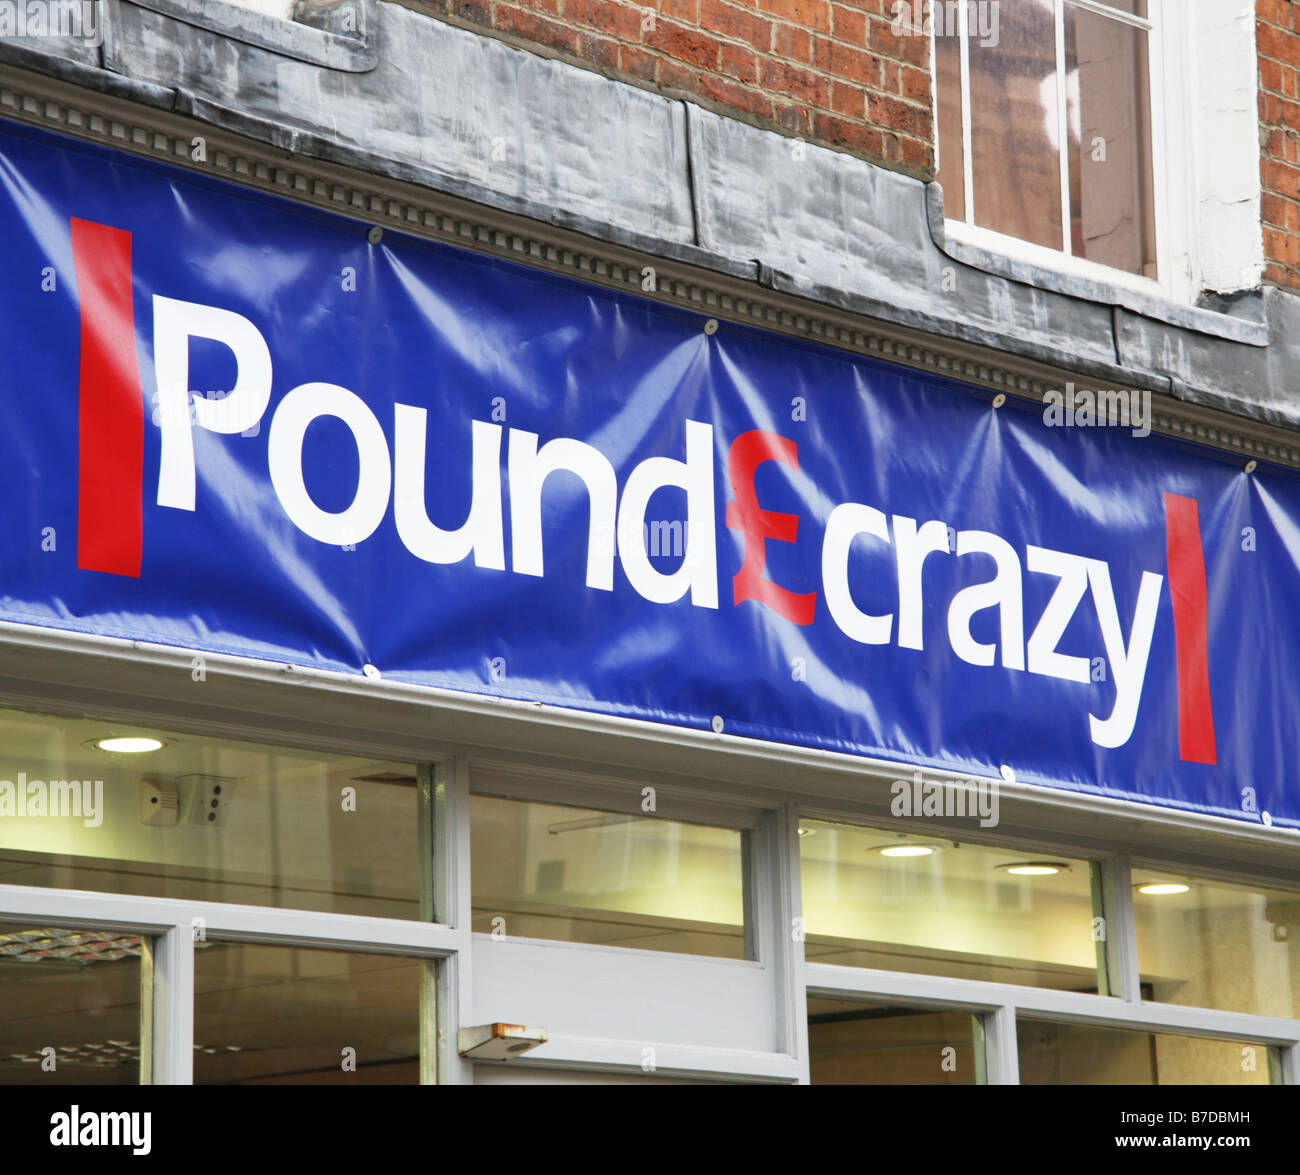 Pound Crazy Shop Foto Stock